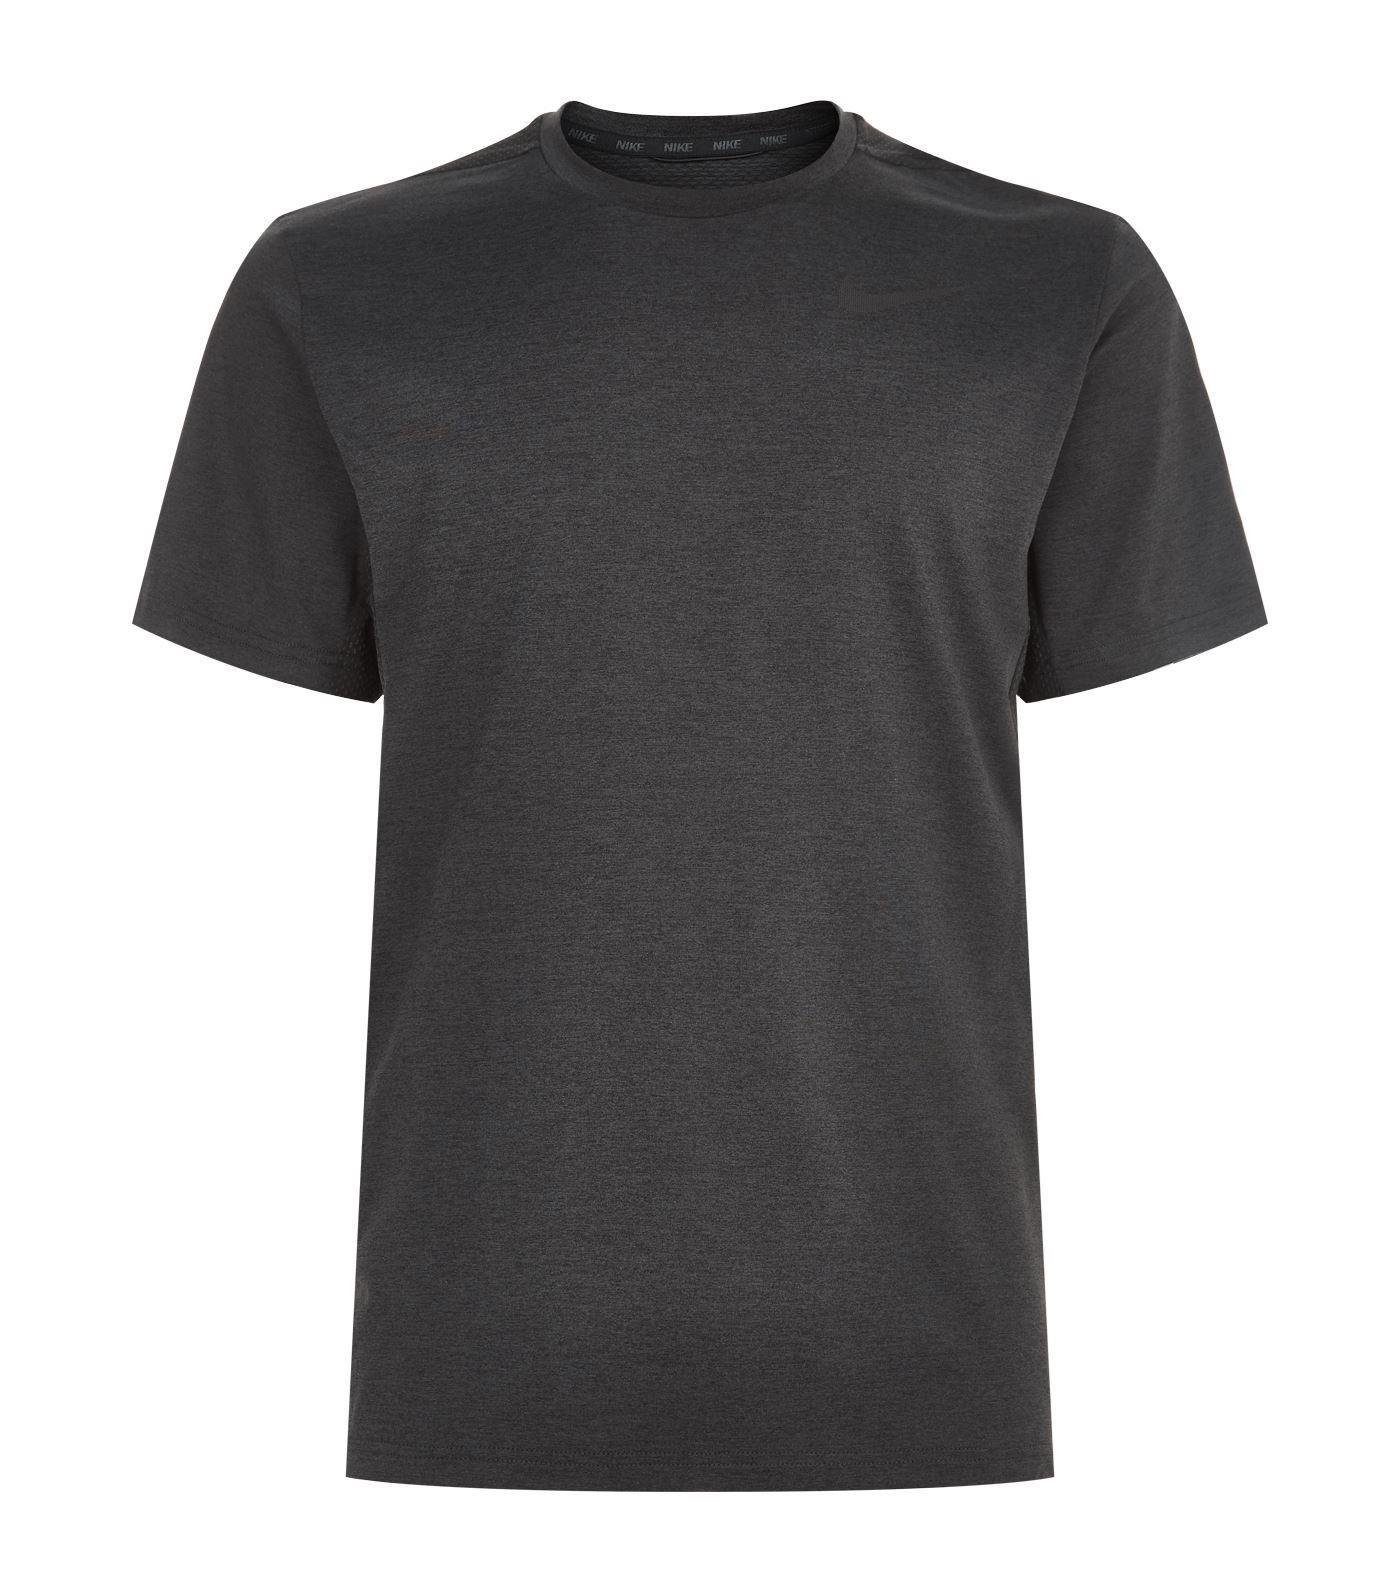 Lyst - Nike Dri-fit T-shirt in Black for Men